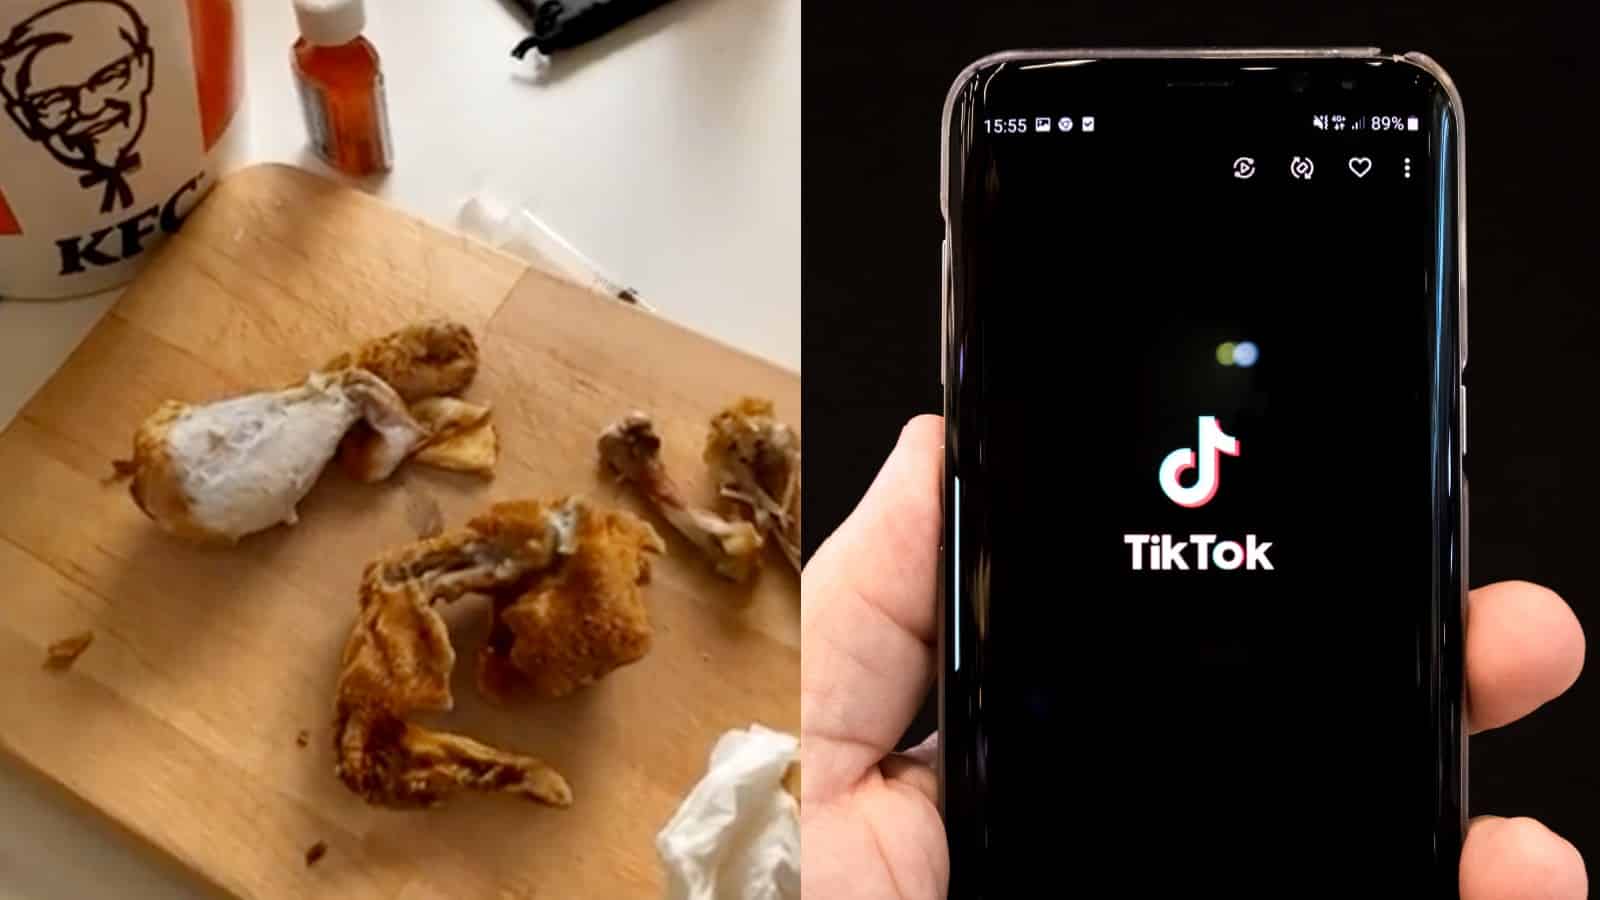 Fried chicken next to the TikTok logo